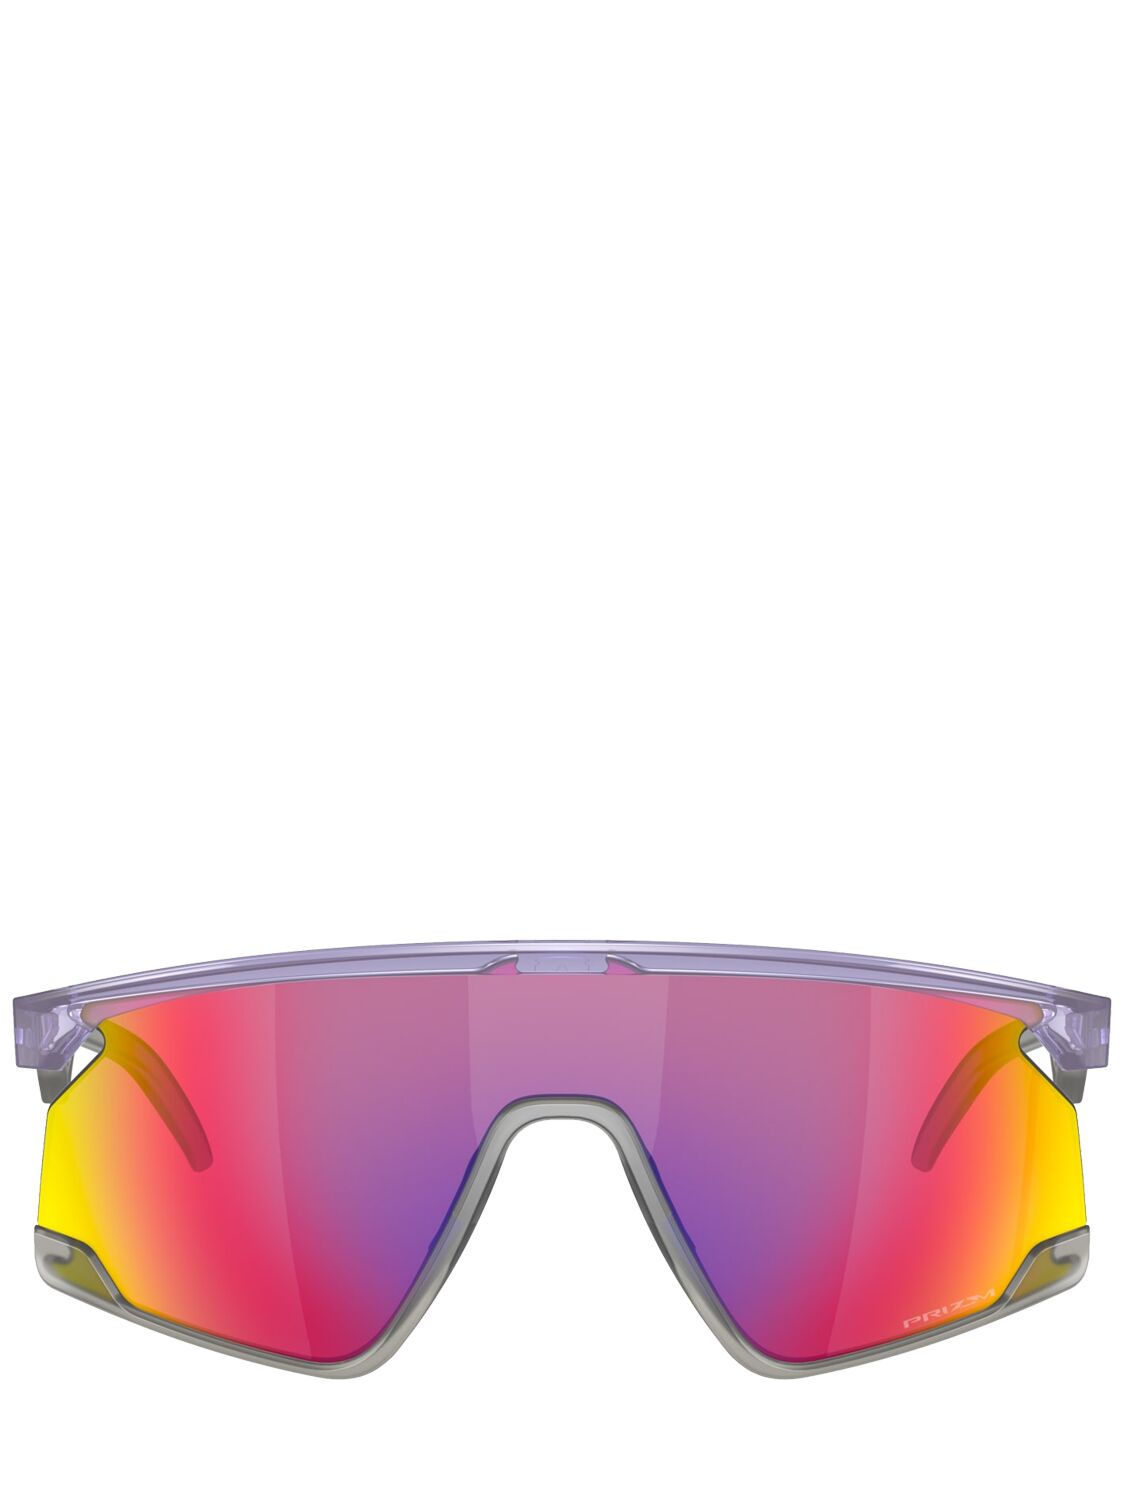 Image of Bxtr Mask Sunglasses